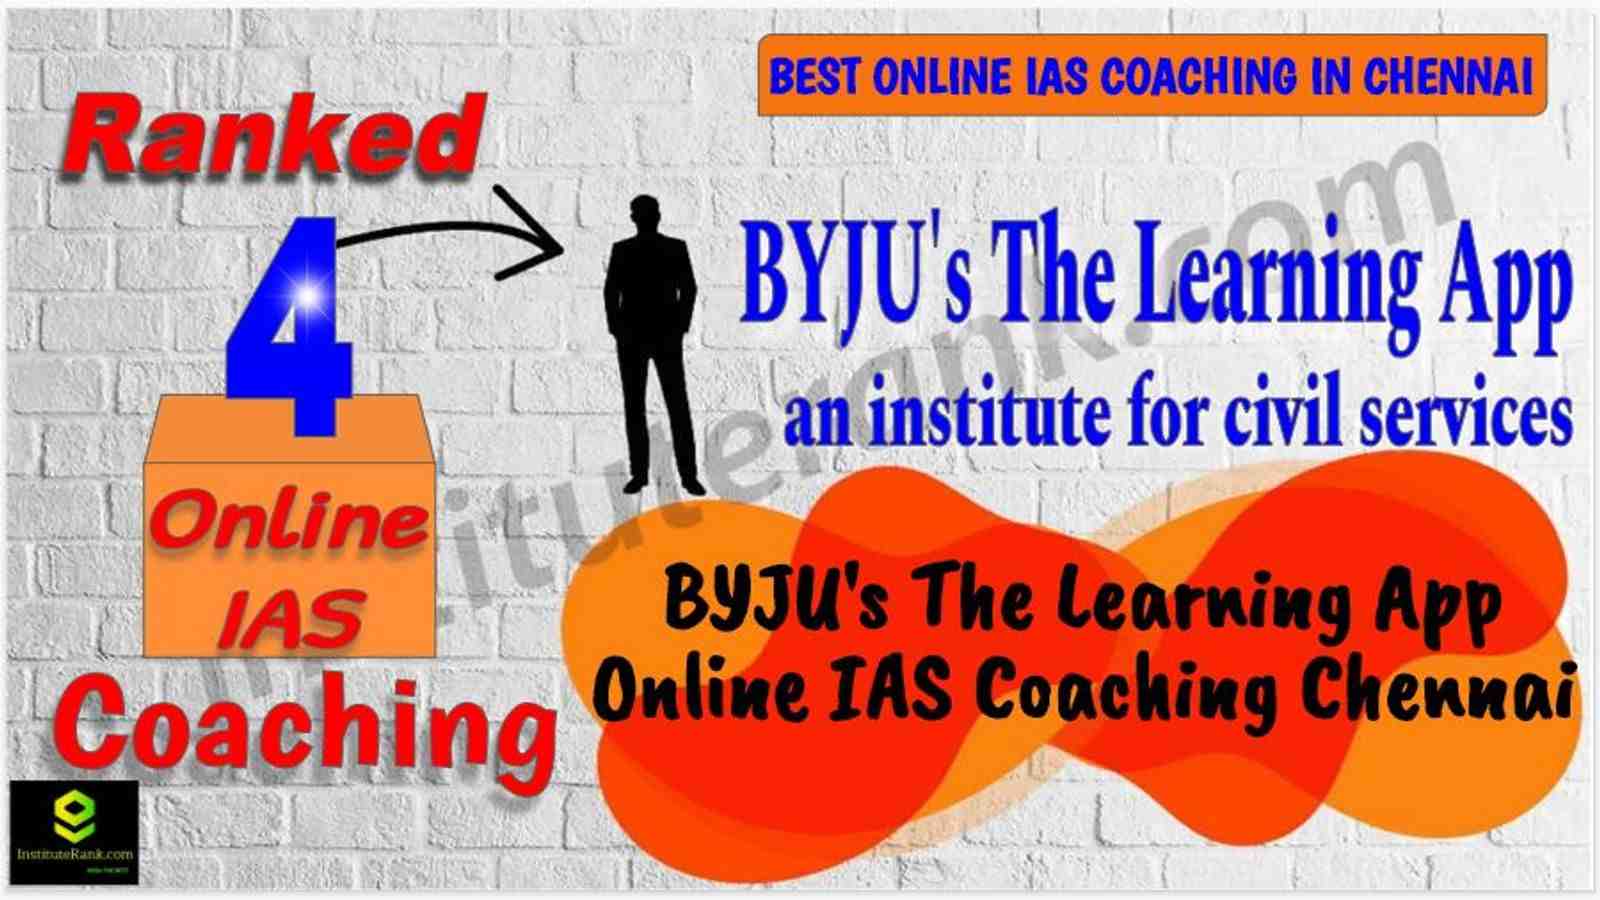 Top Online IAS Coaching in Chennai